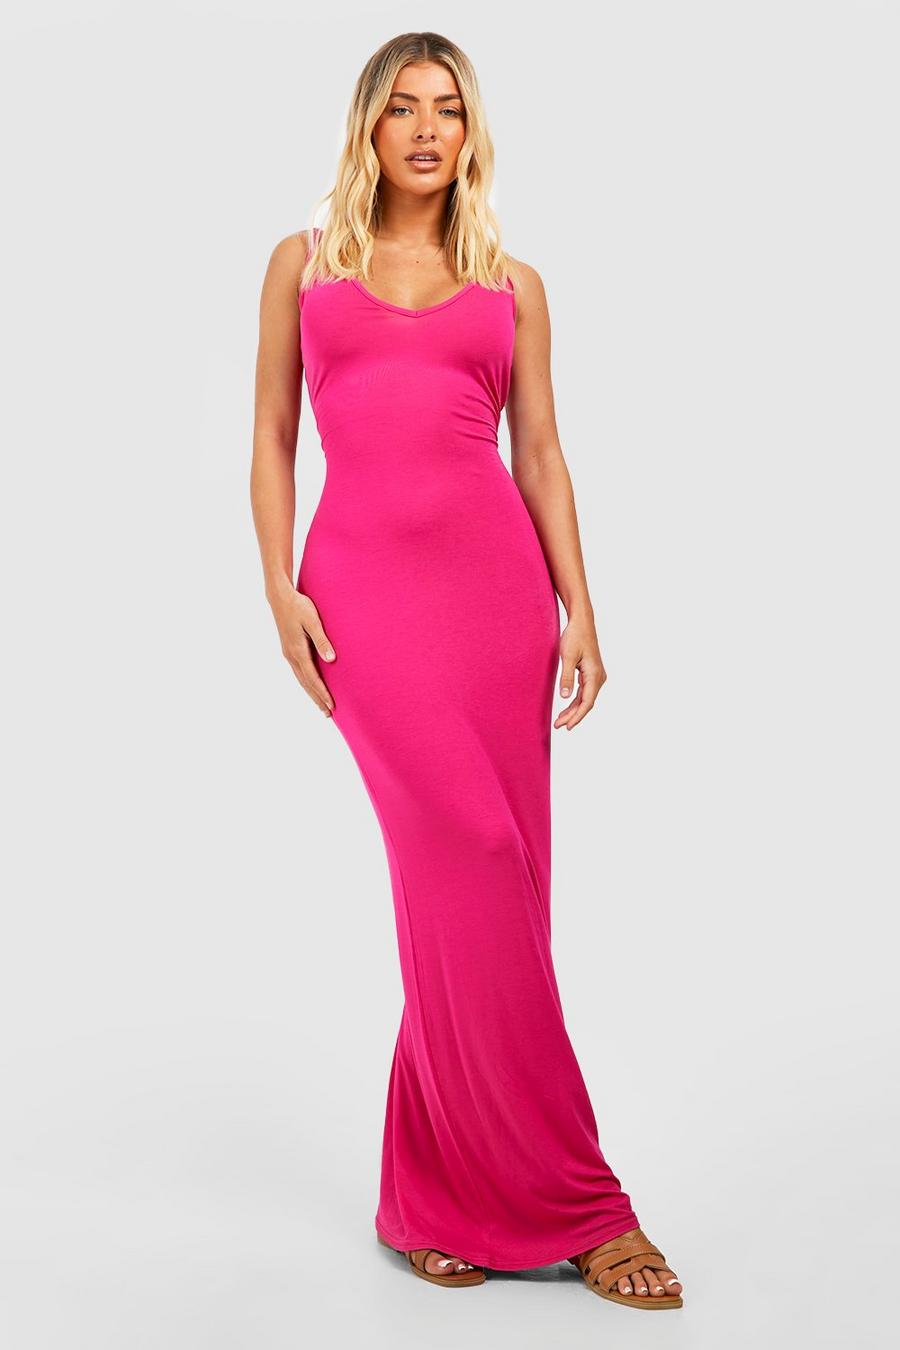 Hot pink Plunge Neck Maxi Dress